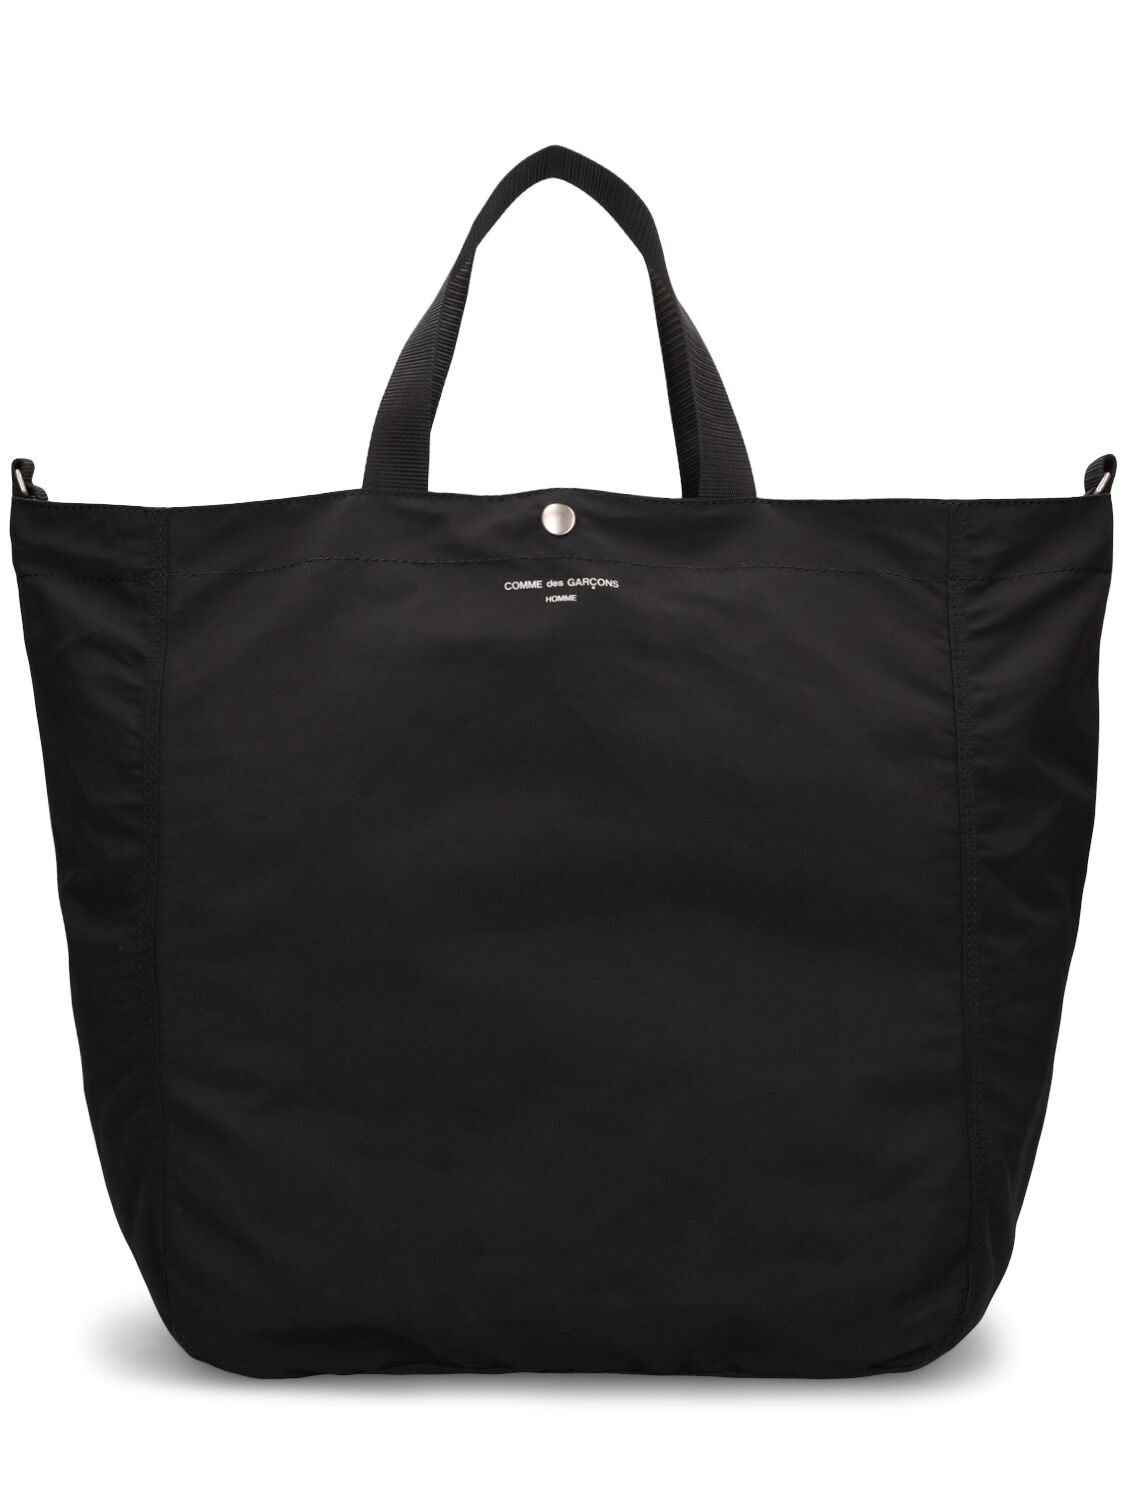 Image of Cotton & Nylon Logo Tote Bag